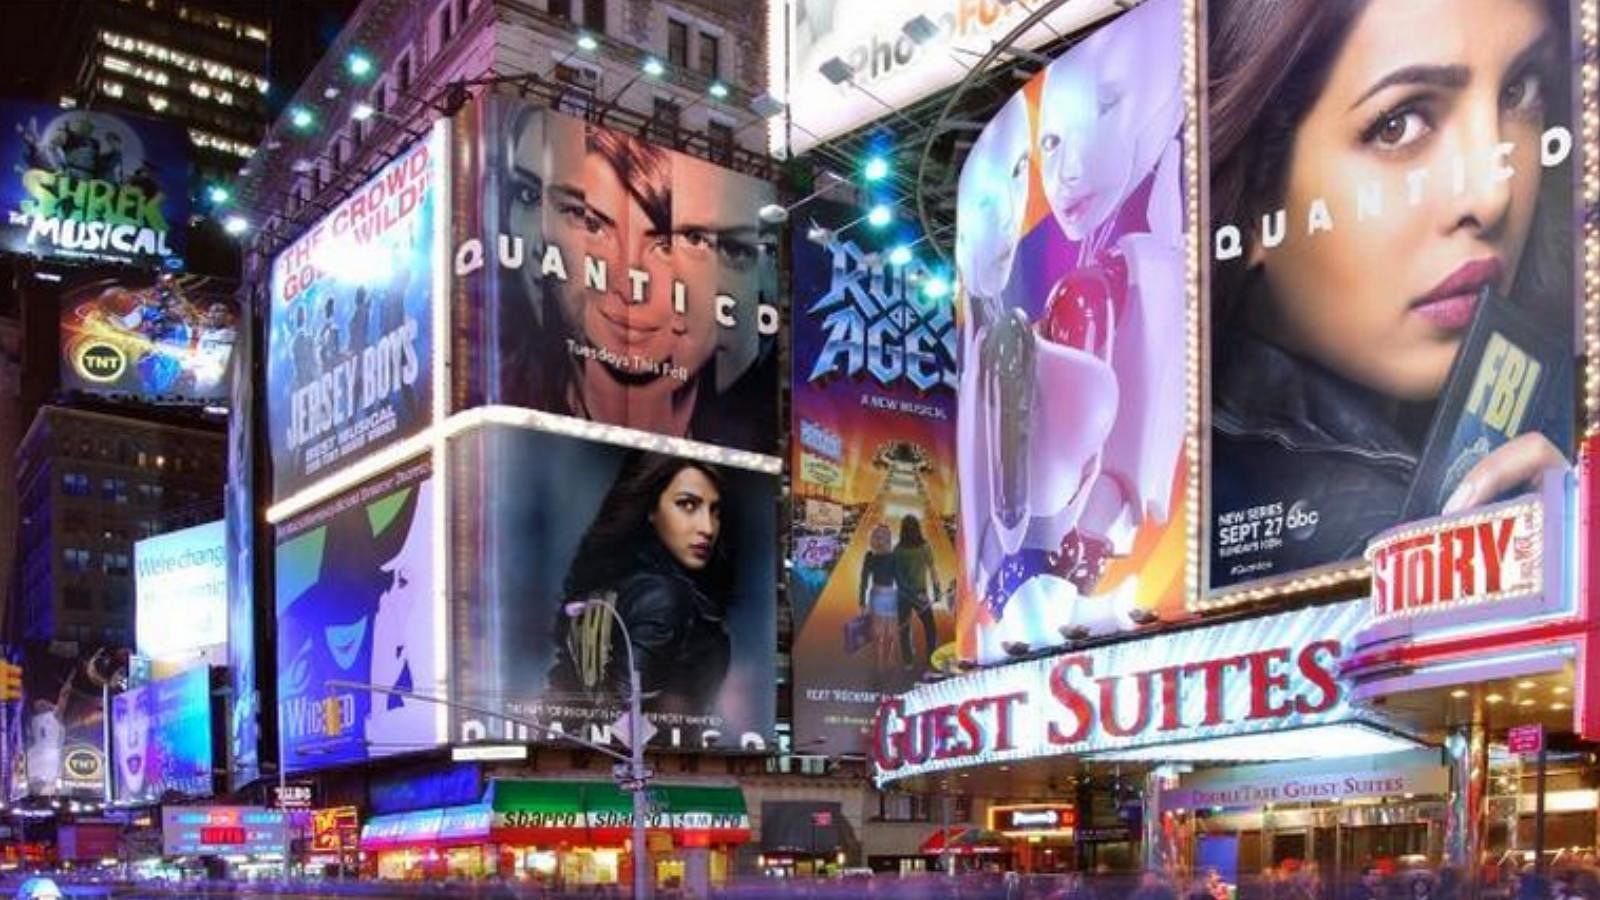 Priyanka Chopra’s Quantico billboards are all over Times Square, NYC&nbsp;(Photo: Twitter/@Abhi_aggi)